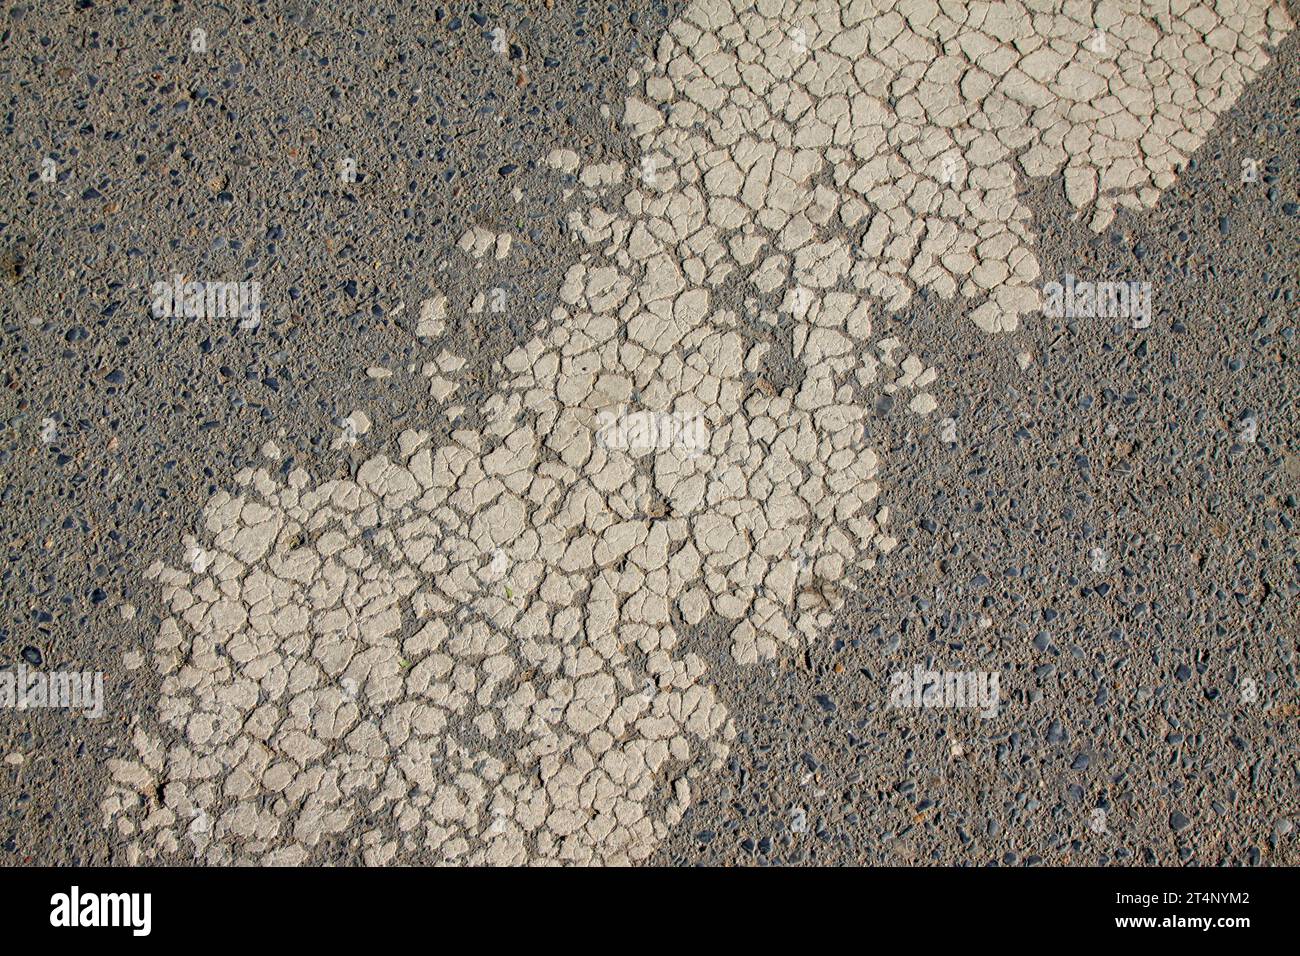 Mottled reticular trace on the asphalt road Stock Photo